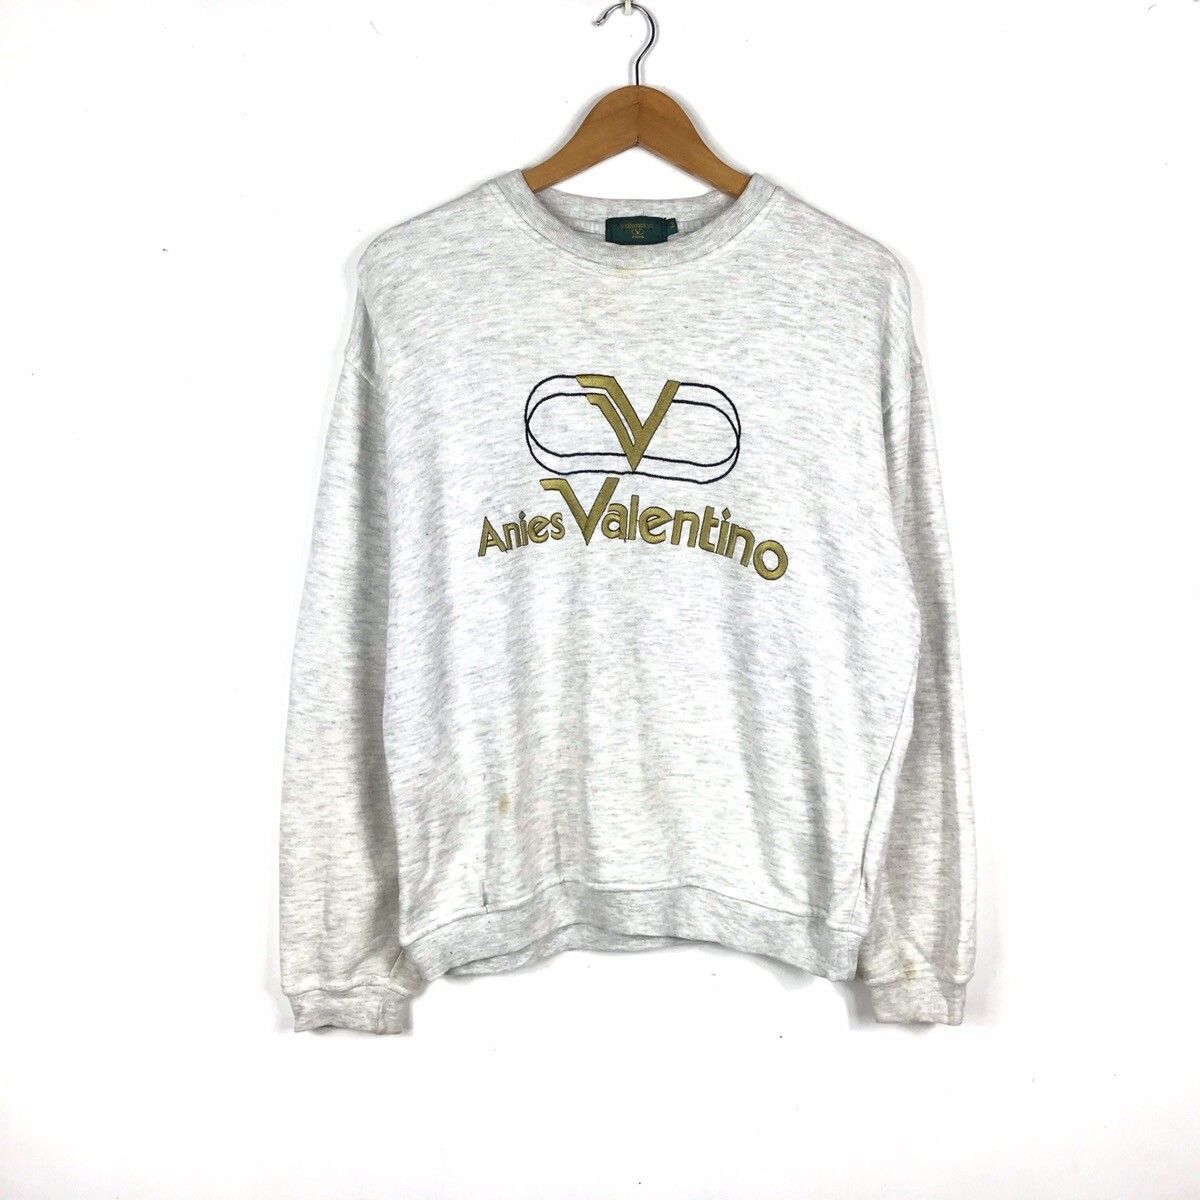 Vintage vintage anies valentino jumper pullover sweatshirt Size US M / EU 48-50 / 2 - 1 Preview